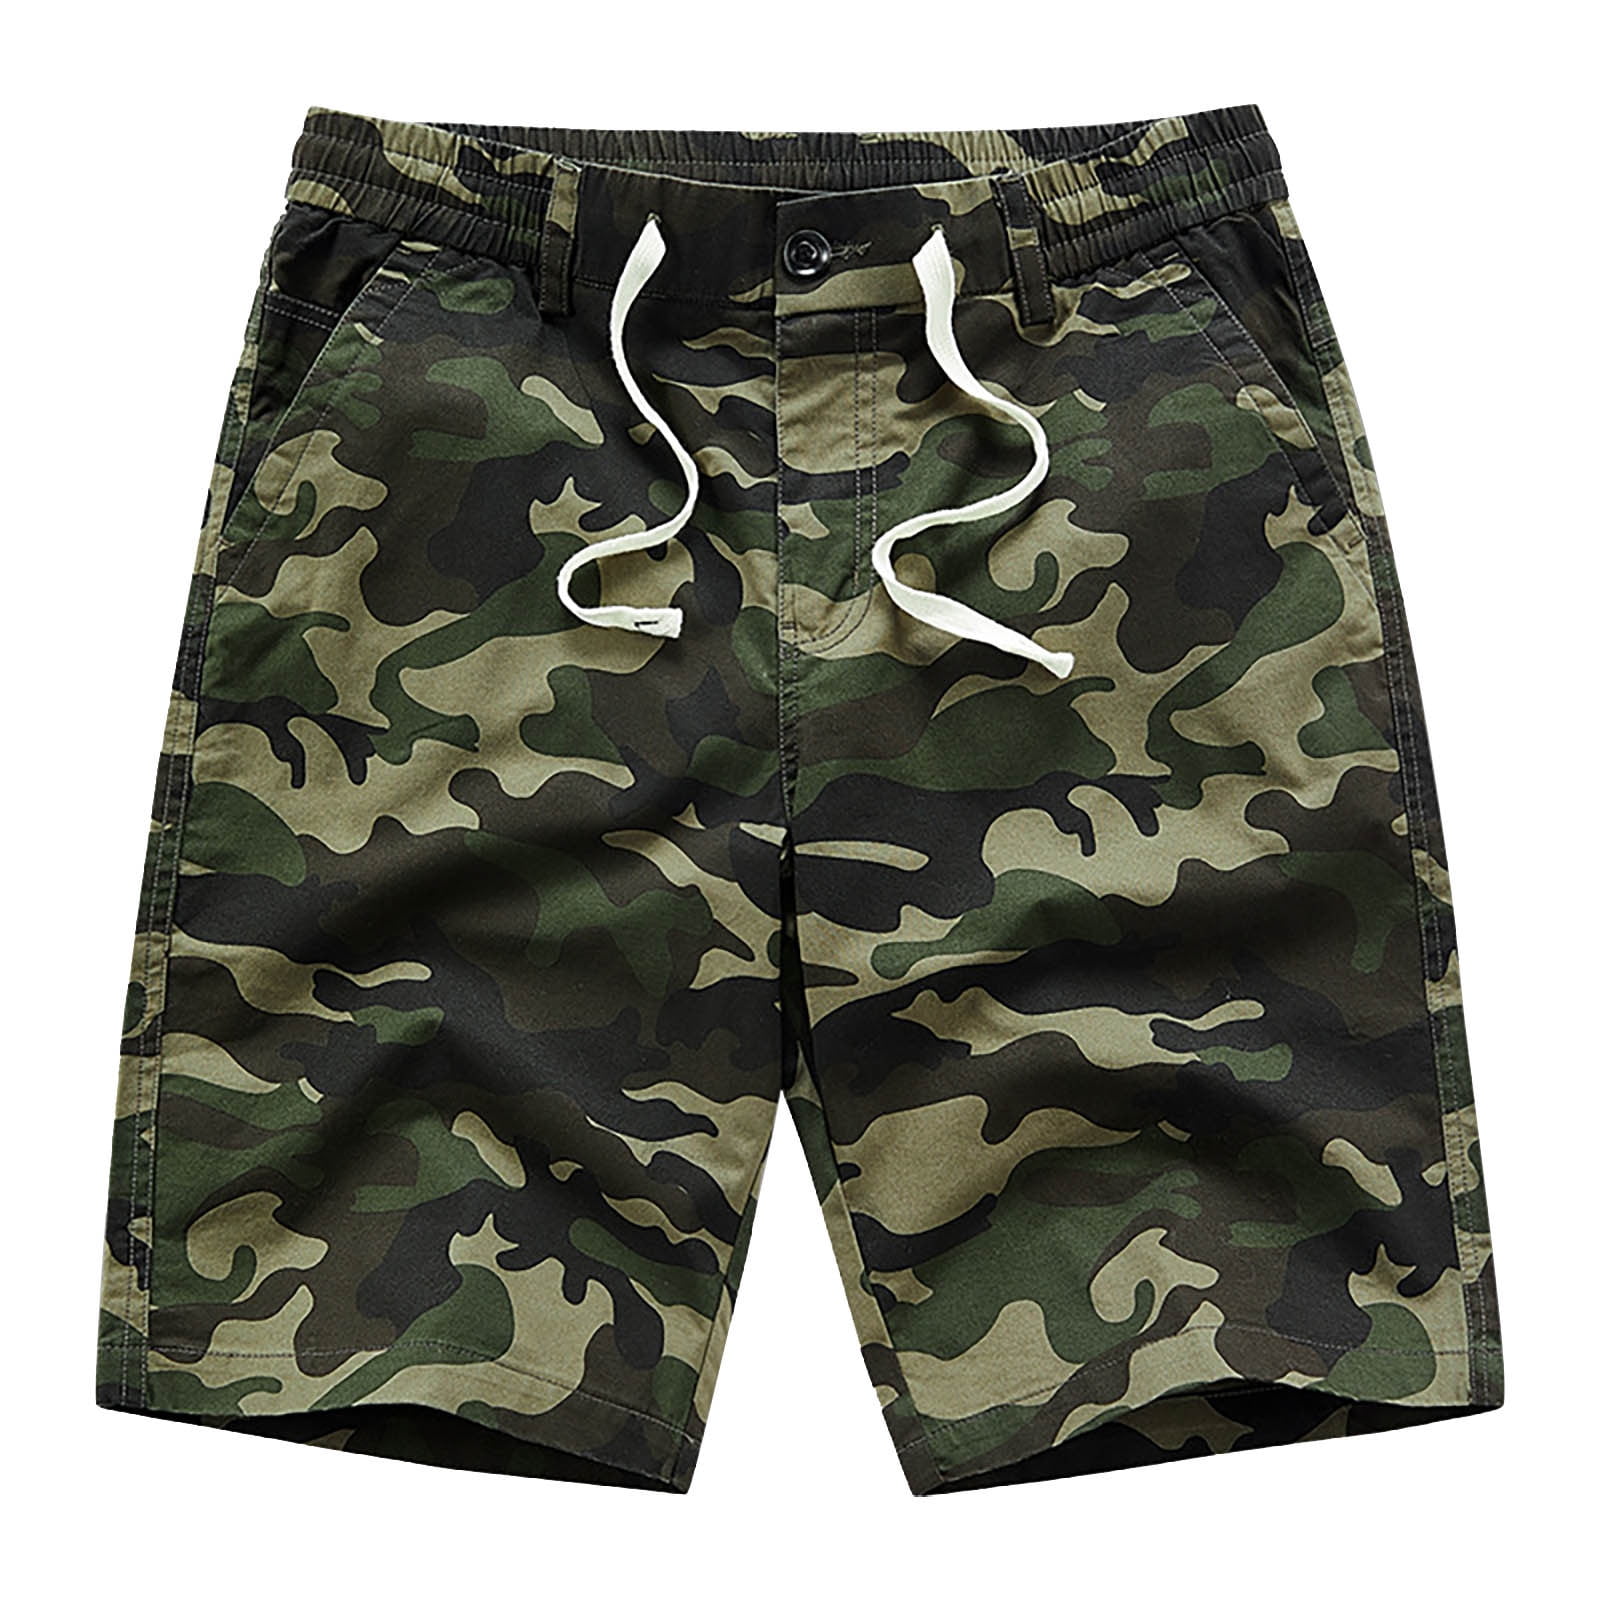 8QIDA Leisure Jogging Cargo Cotton Men's Summer Shorts Shorts Vintage ...